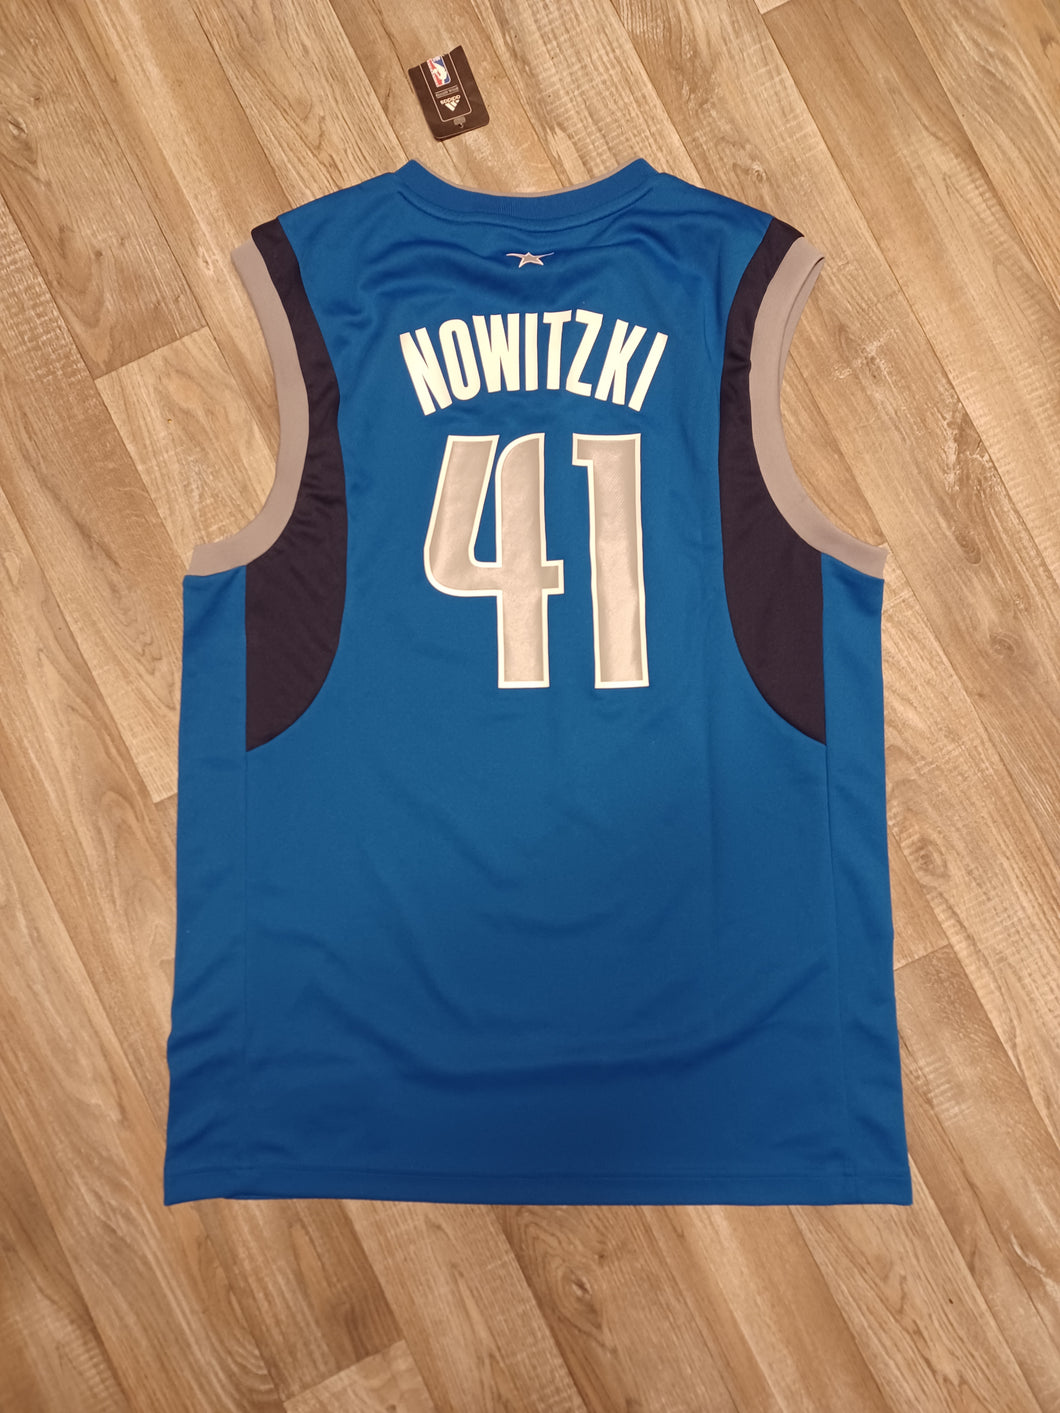 Dirk Nowitzki Dallas Mavericks Jersey Size Medium